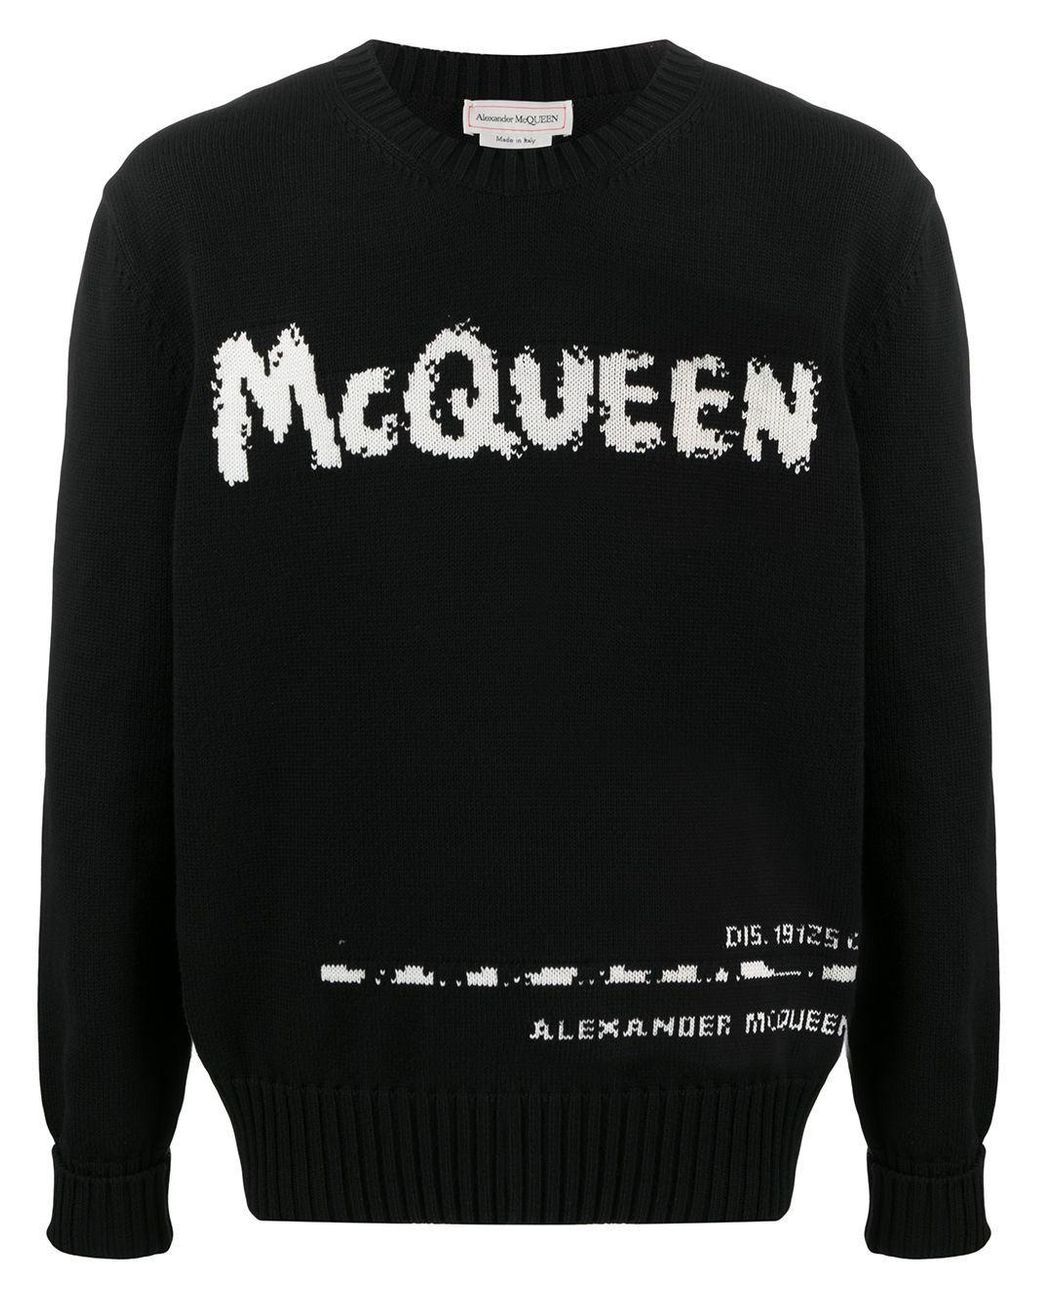 Alexander McQueen Cotton Sweater in Black for Men - Save 20% - Lyst